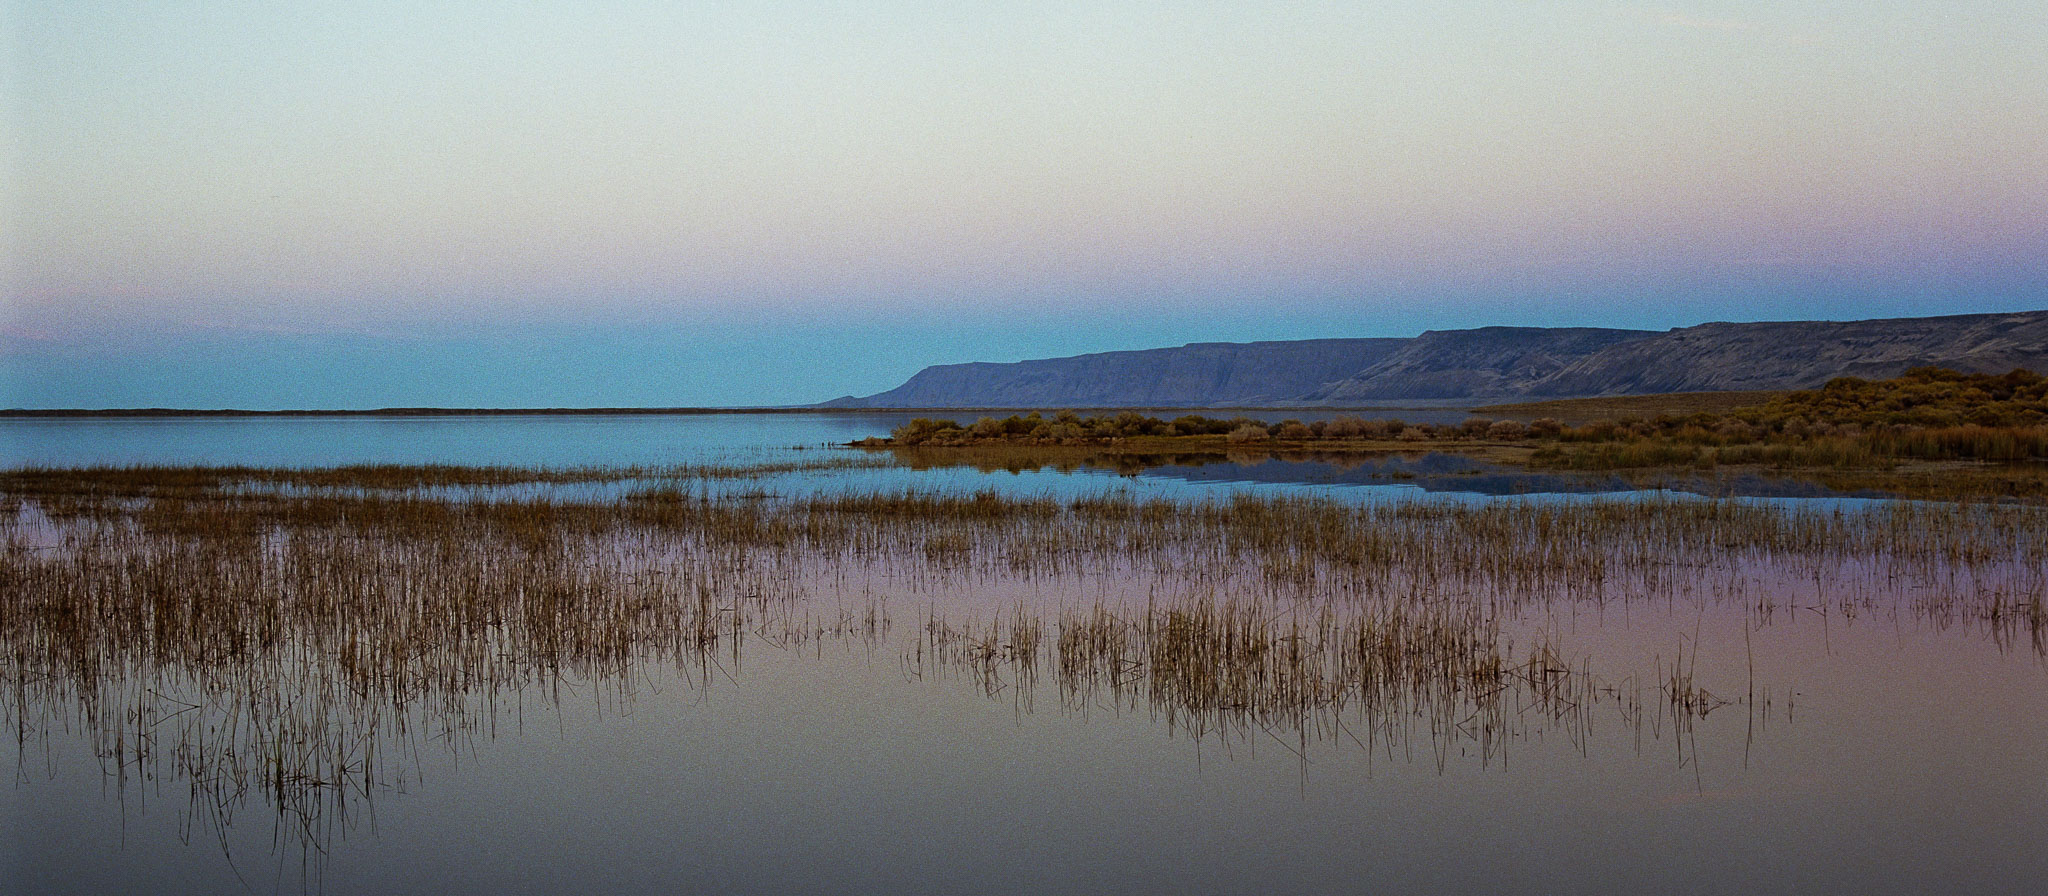 flagstaff-lake-hart-mnt-antelope-refuge-central-or-8x19.jpg